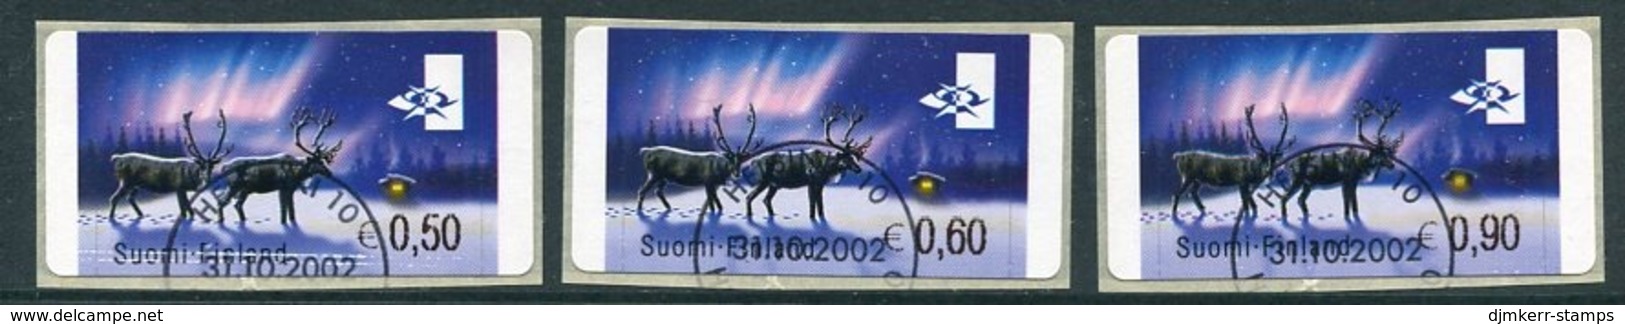 FINLAND 2002 Reindeer ATM, Three Values Used.  Michel 37 - Viñetas De Franqueo [ATM]